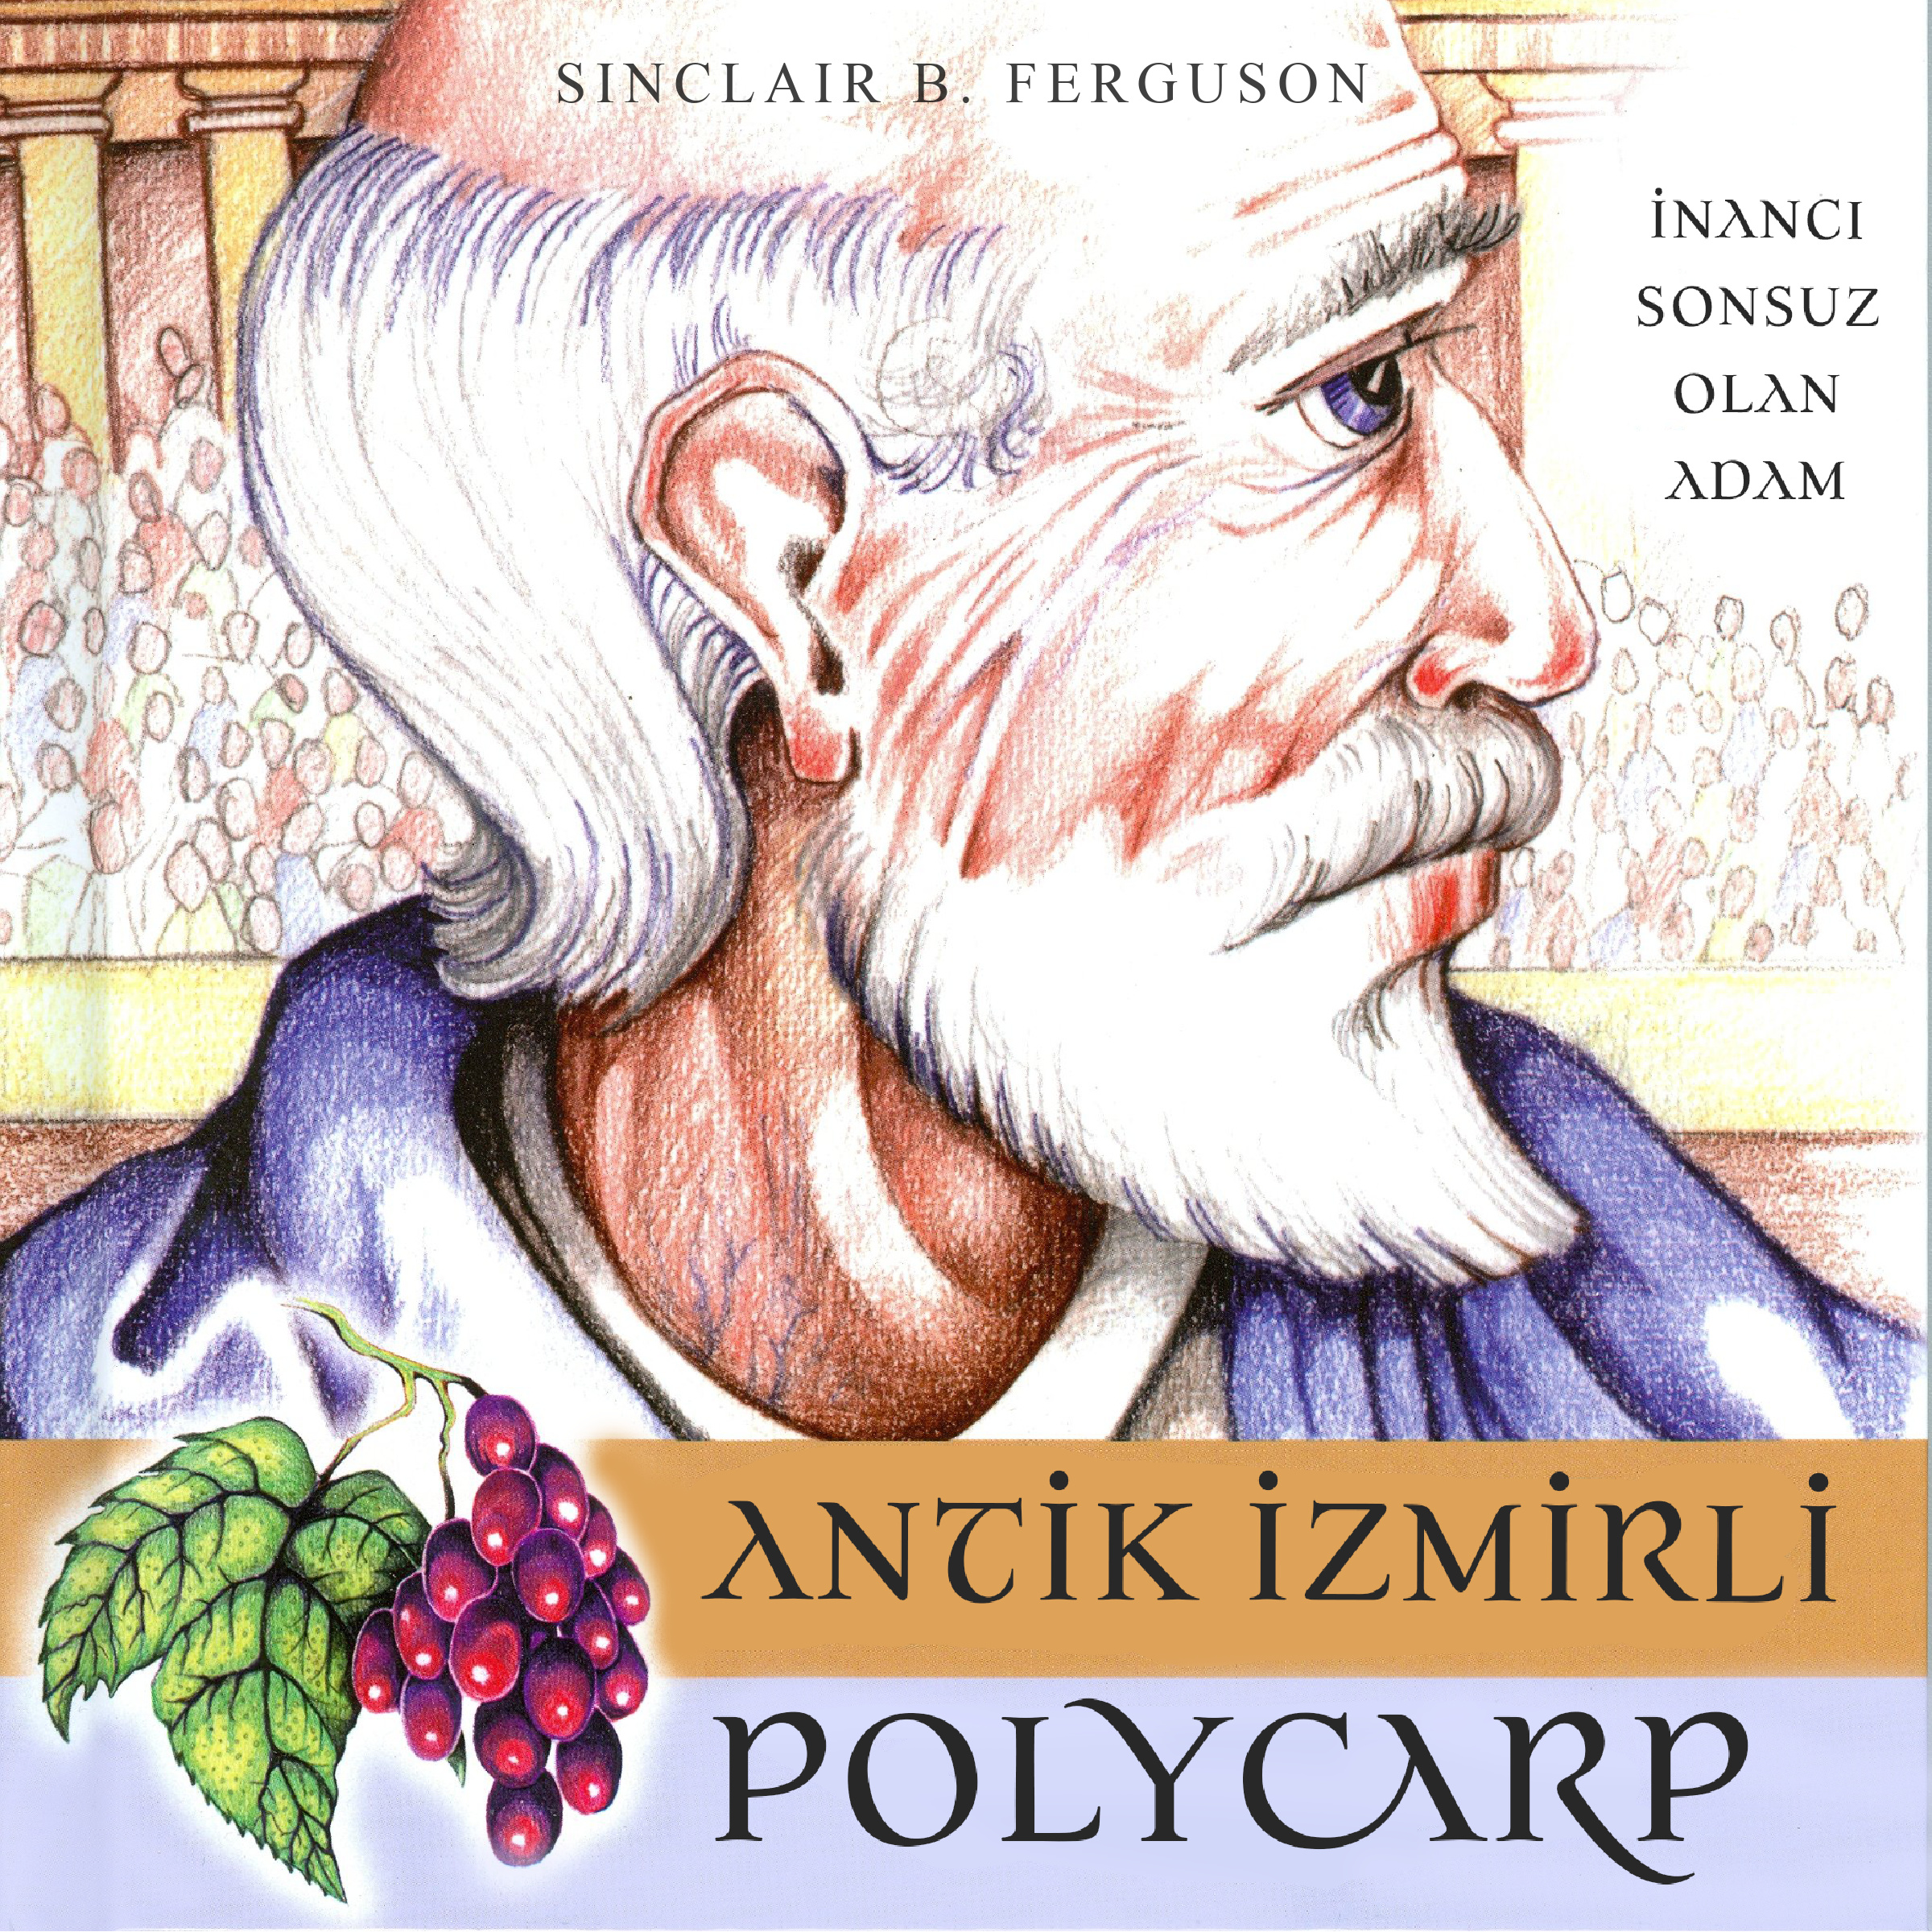 Antik İzmirli Polycarp